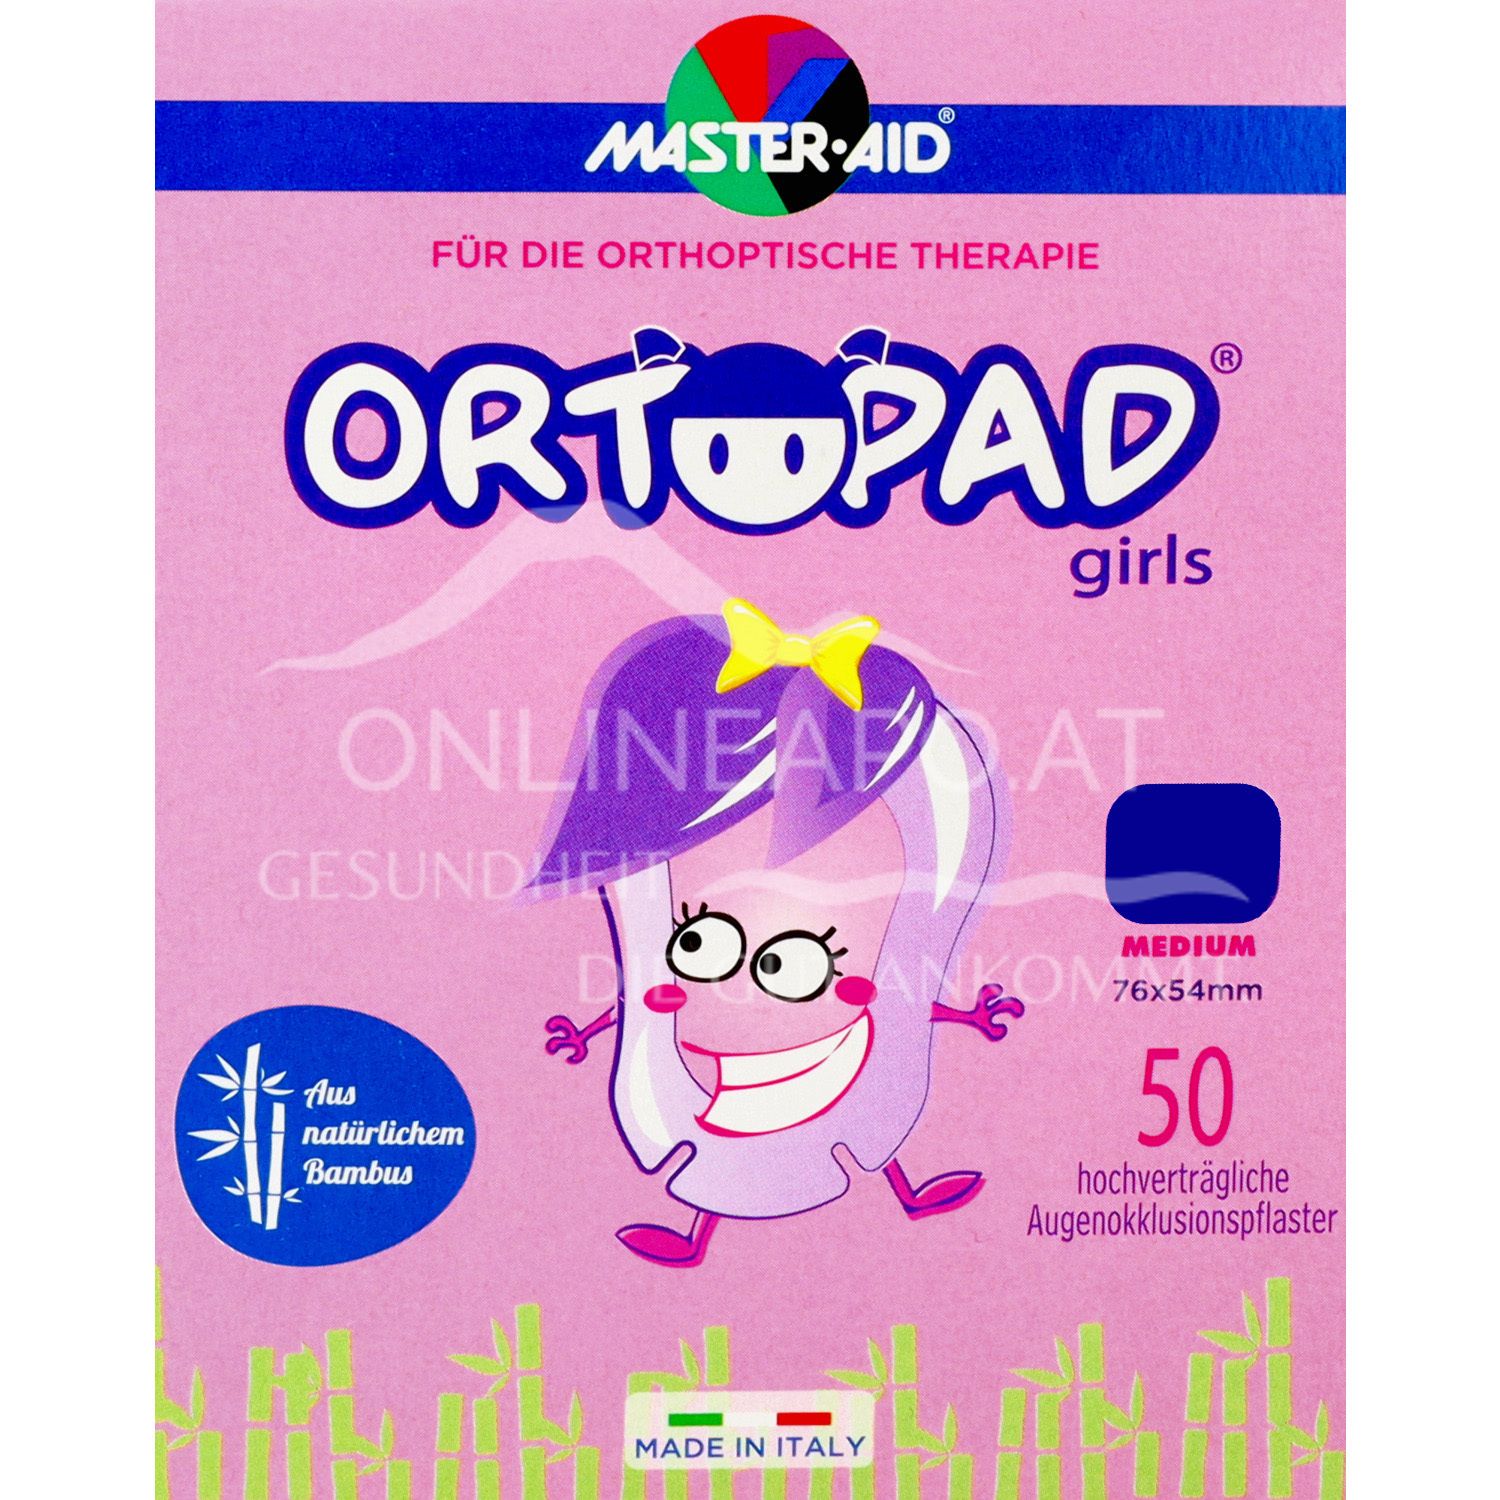 ORTOPAD® girls Augenokklusionspflaster Medium 76 x 54 mm